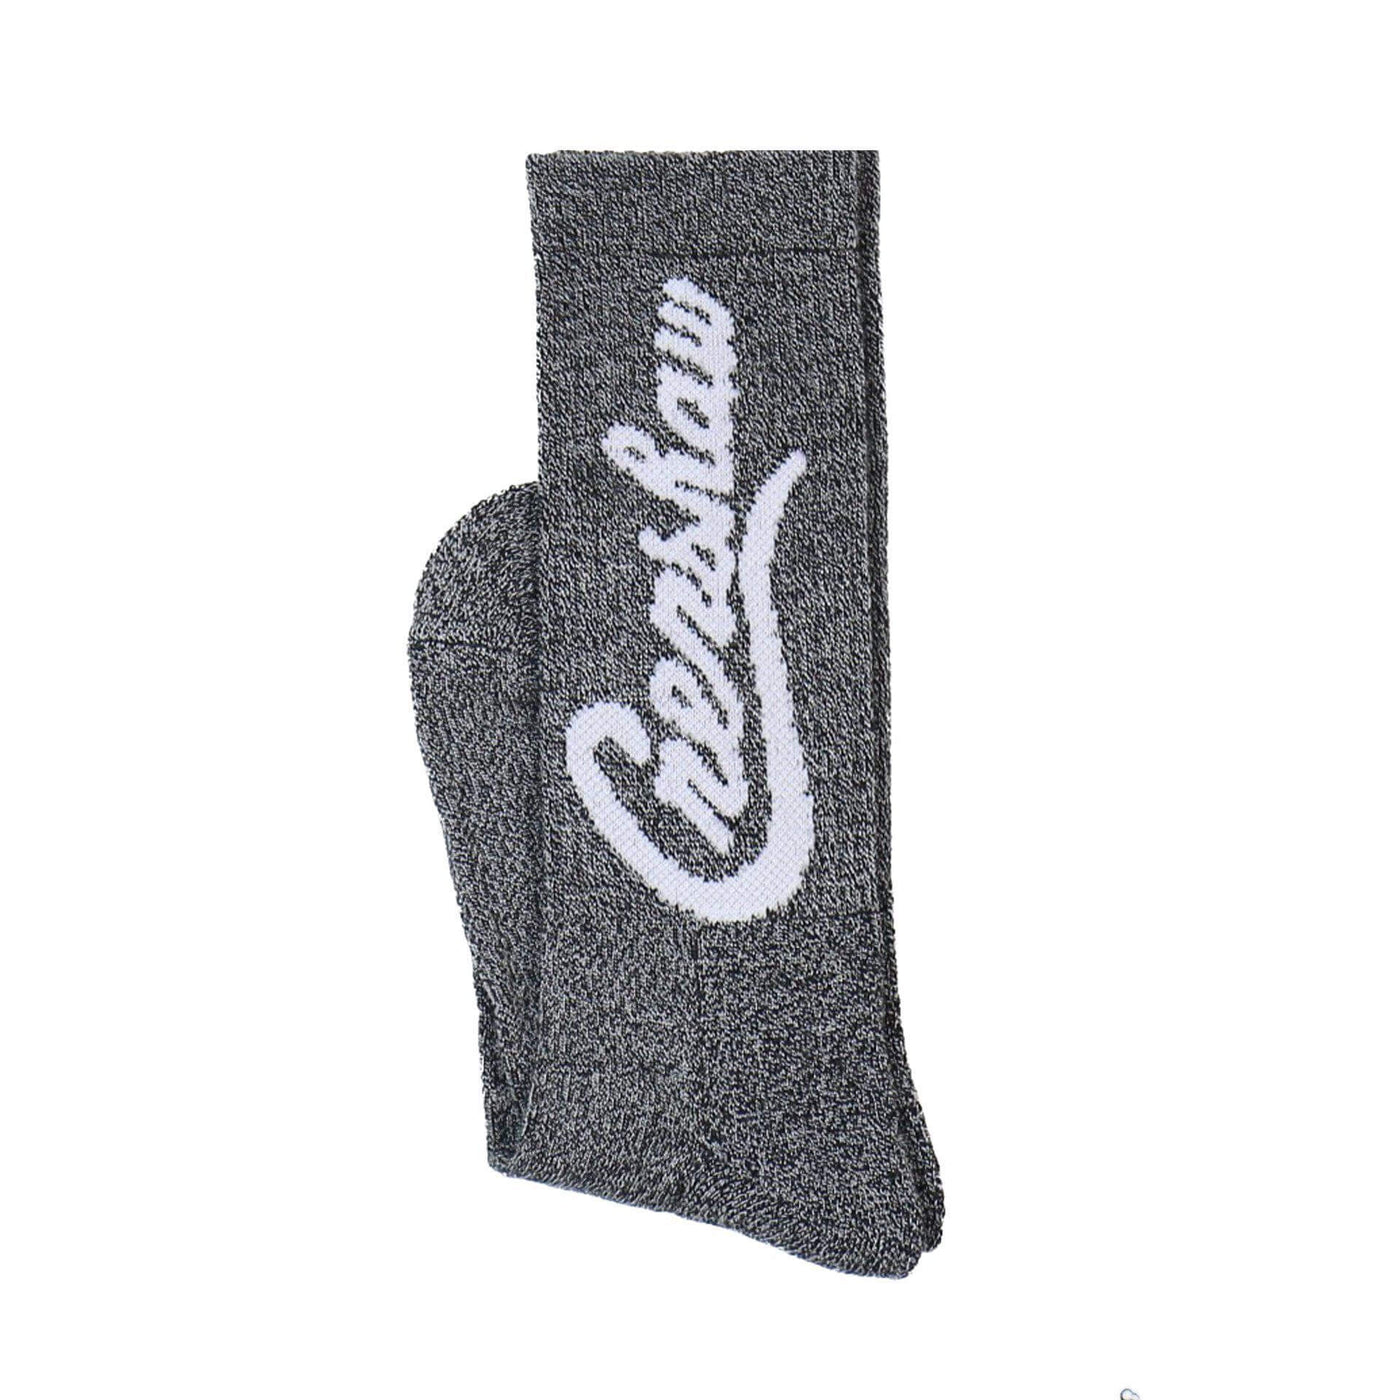 Crenshaw Socks - Charcoal/White-The Marathon Clothing